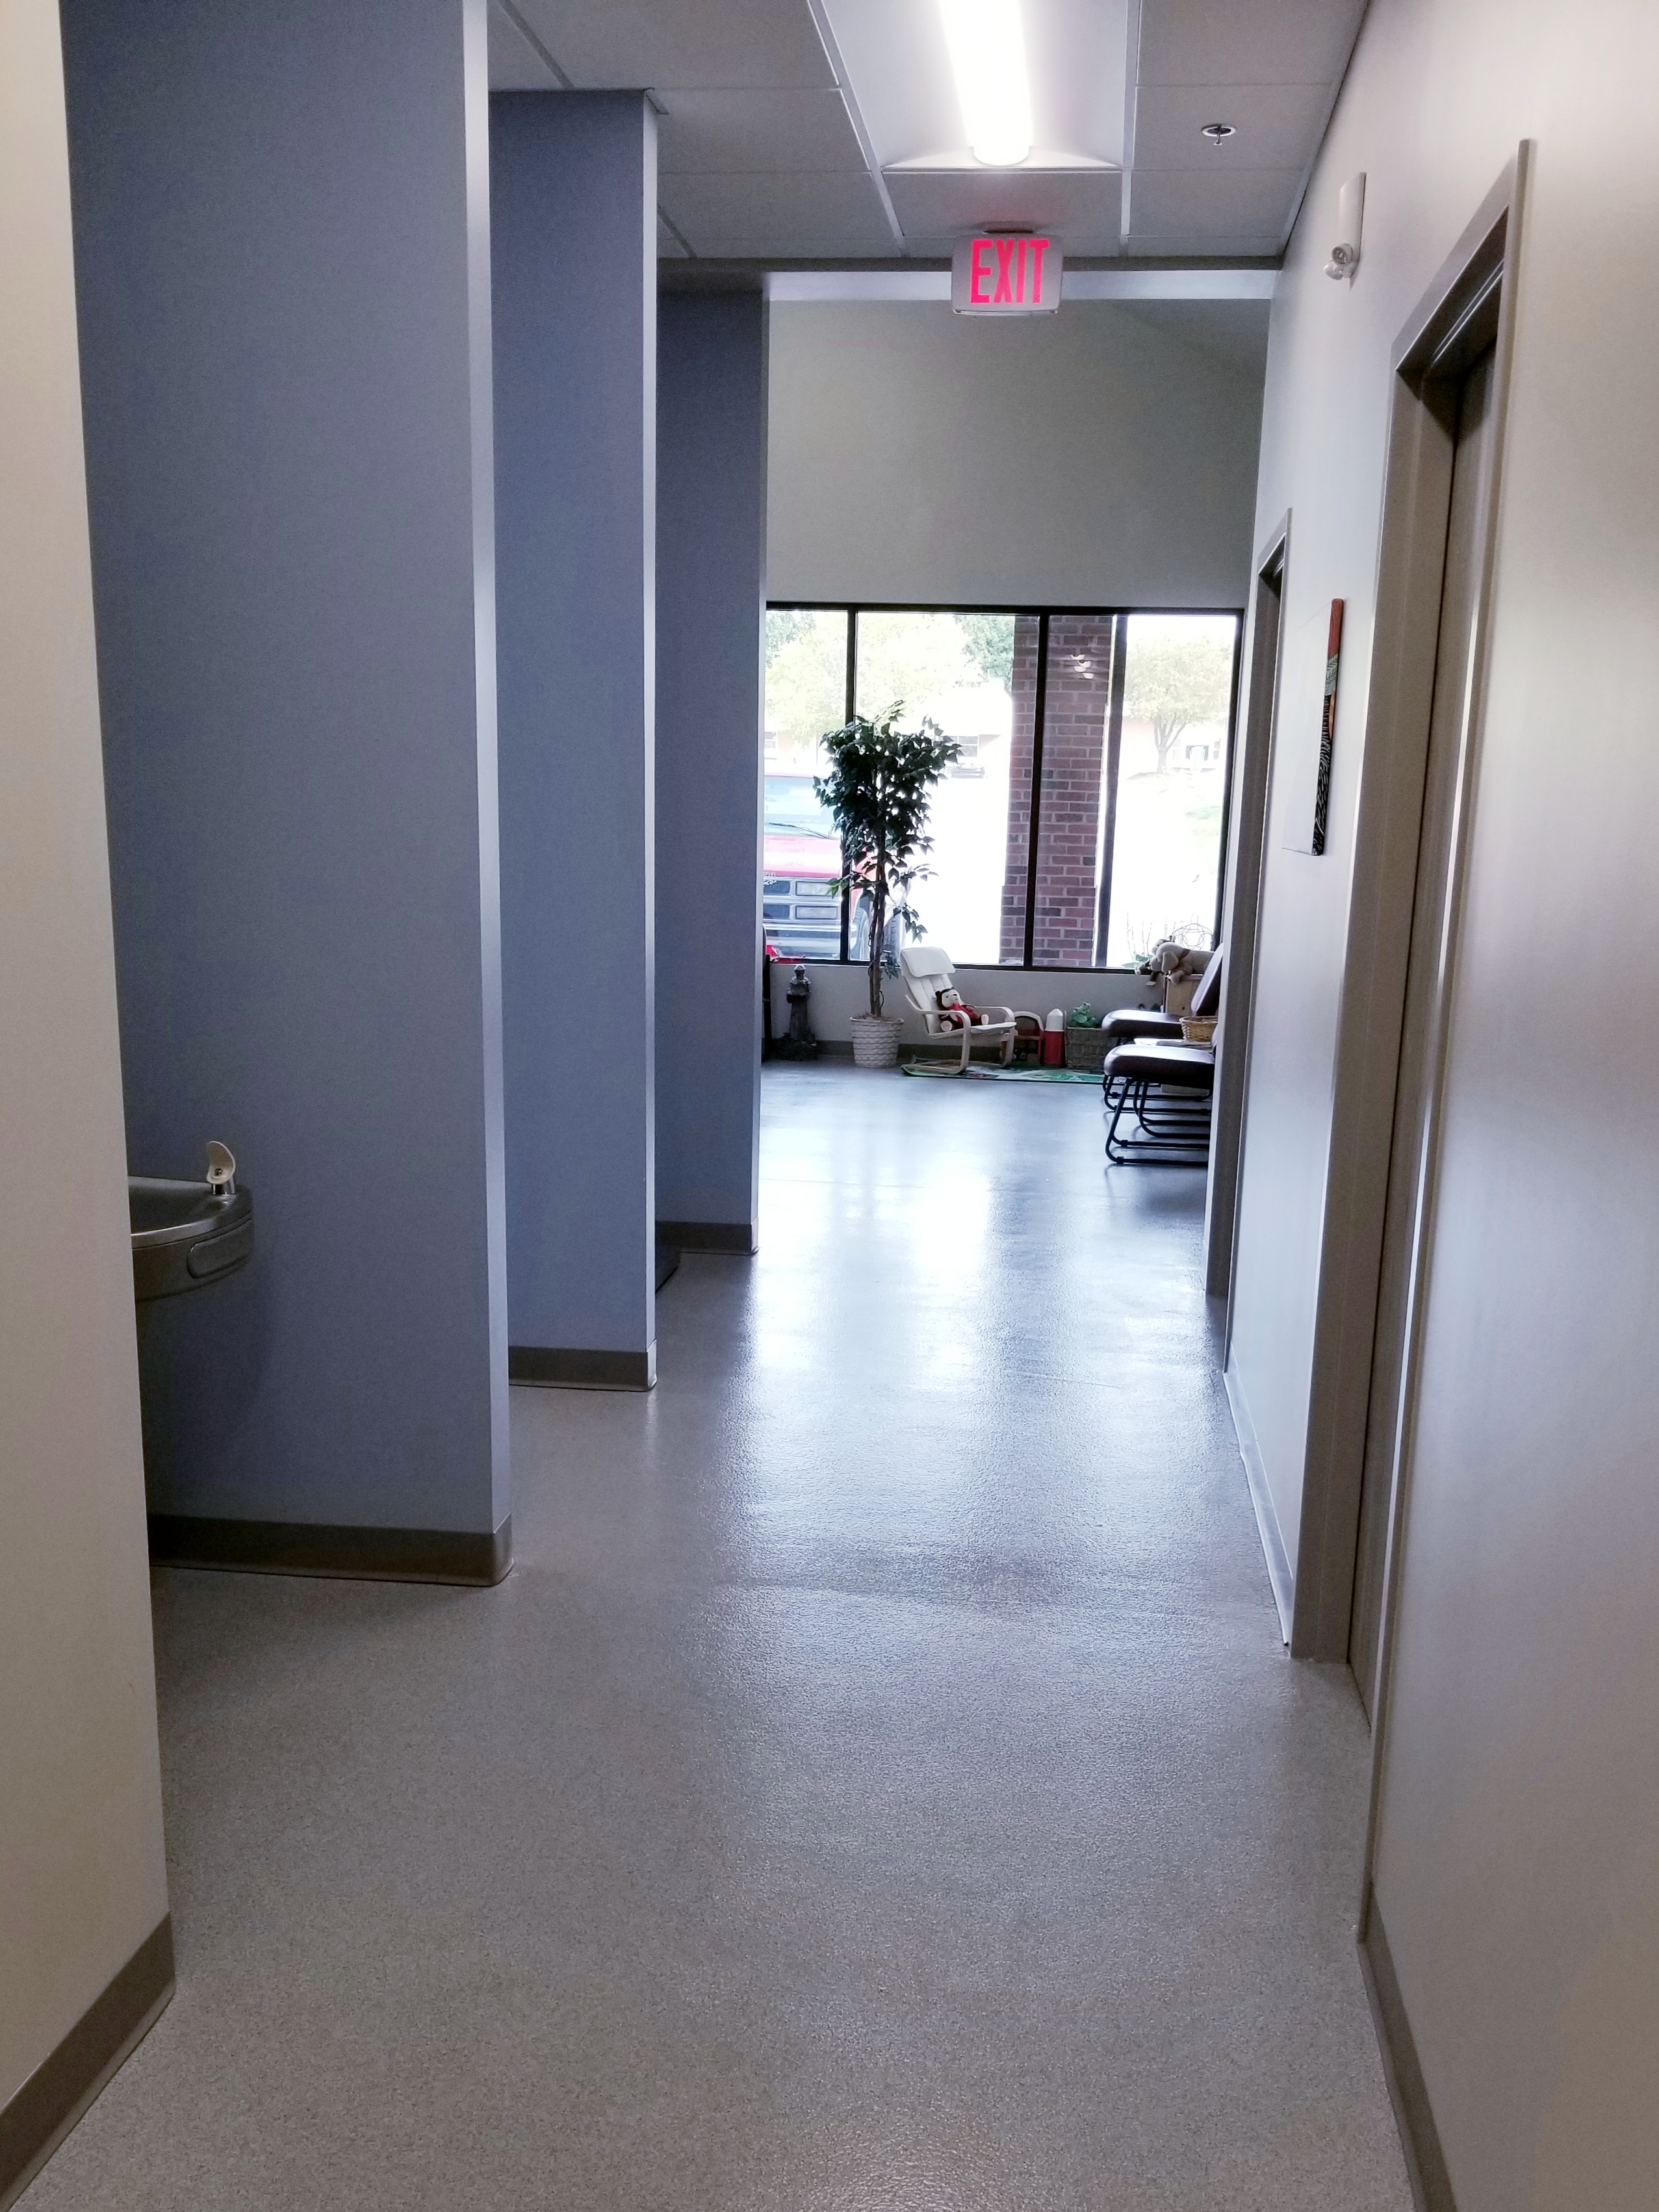 Hallway to lobby from lab